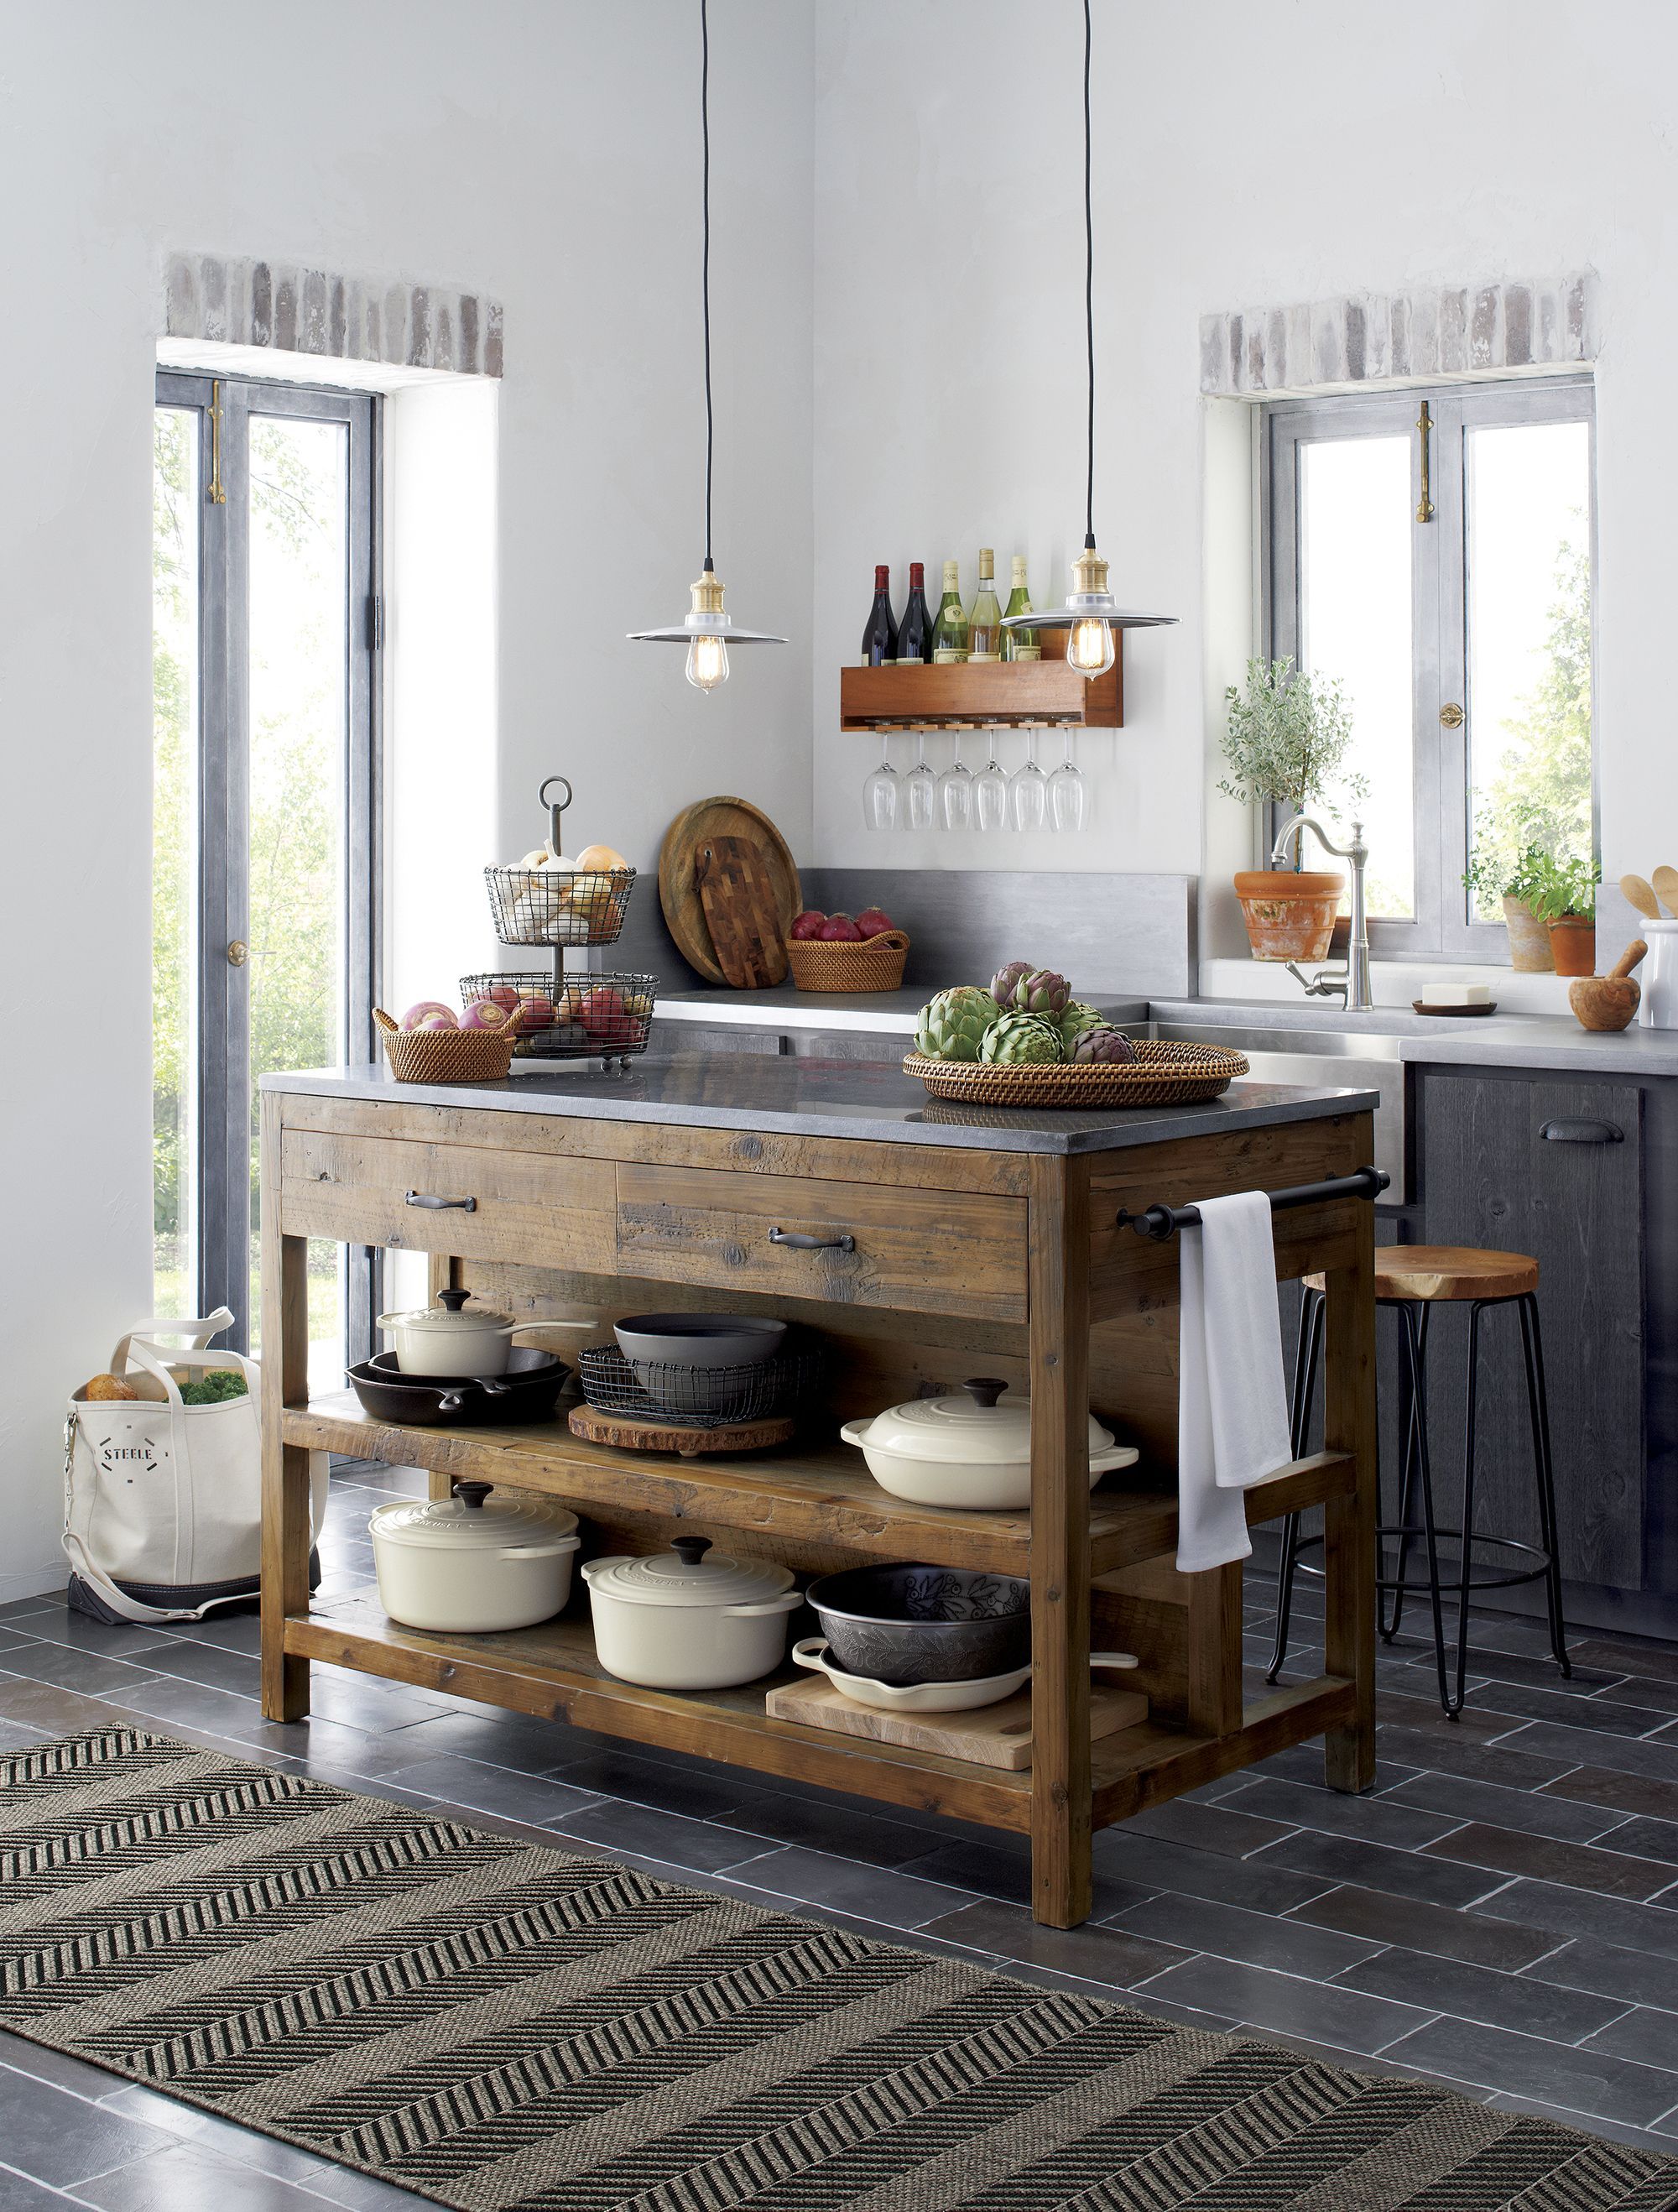 Like a treasured vintage find or a custom-designed piece, this elegant kitchen isl